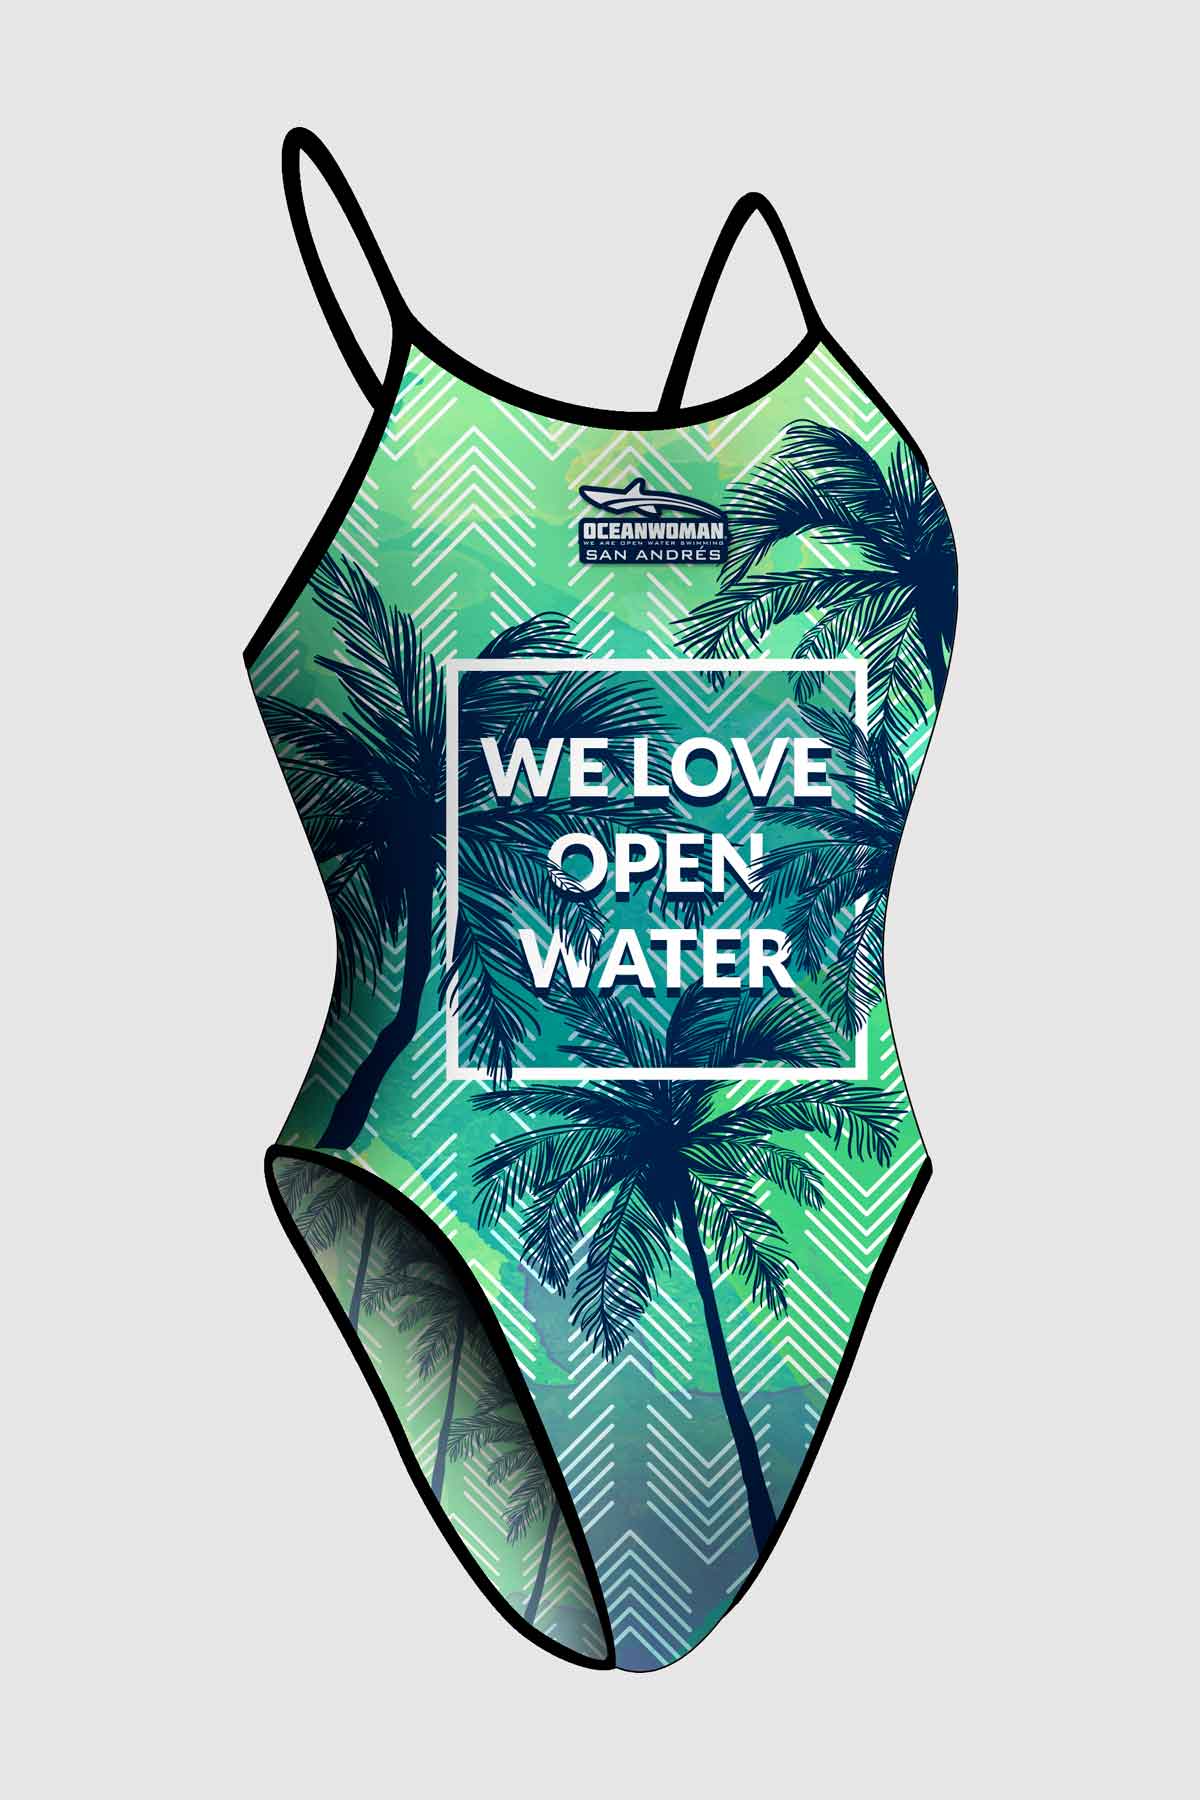 San Andres Oceanman one piece swimsuit - We are open water